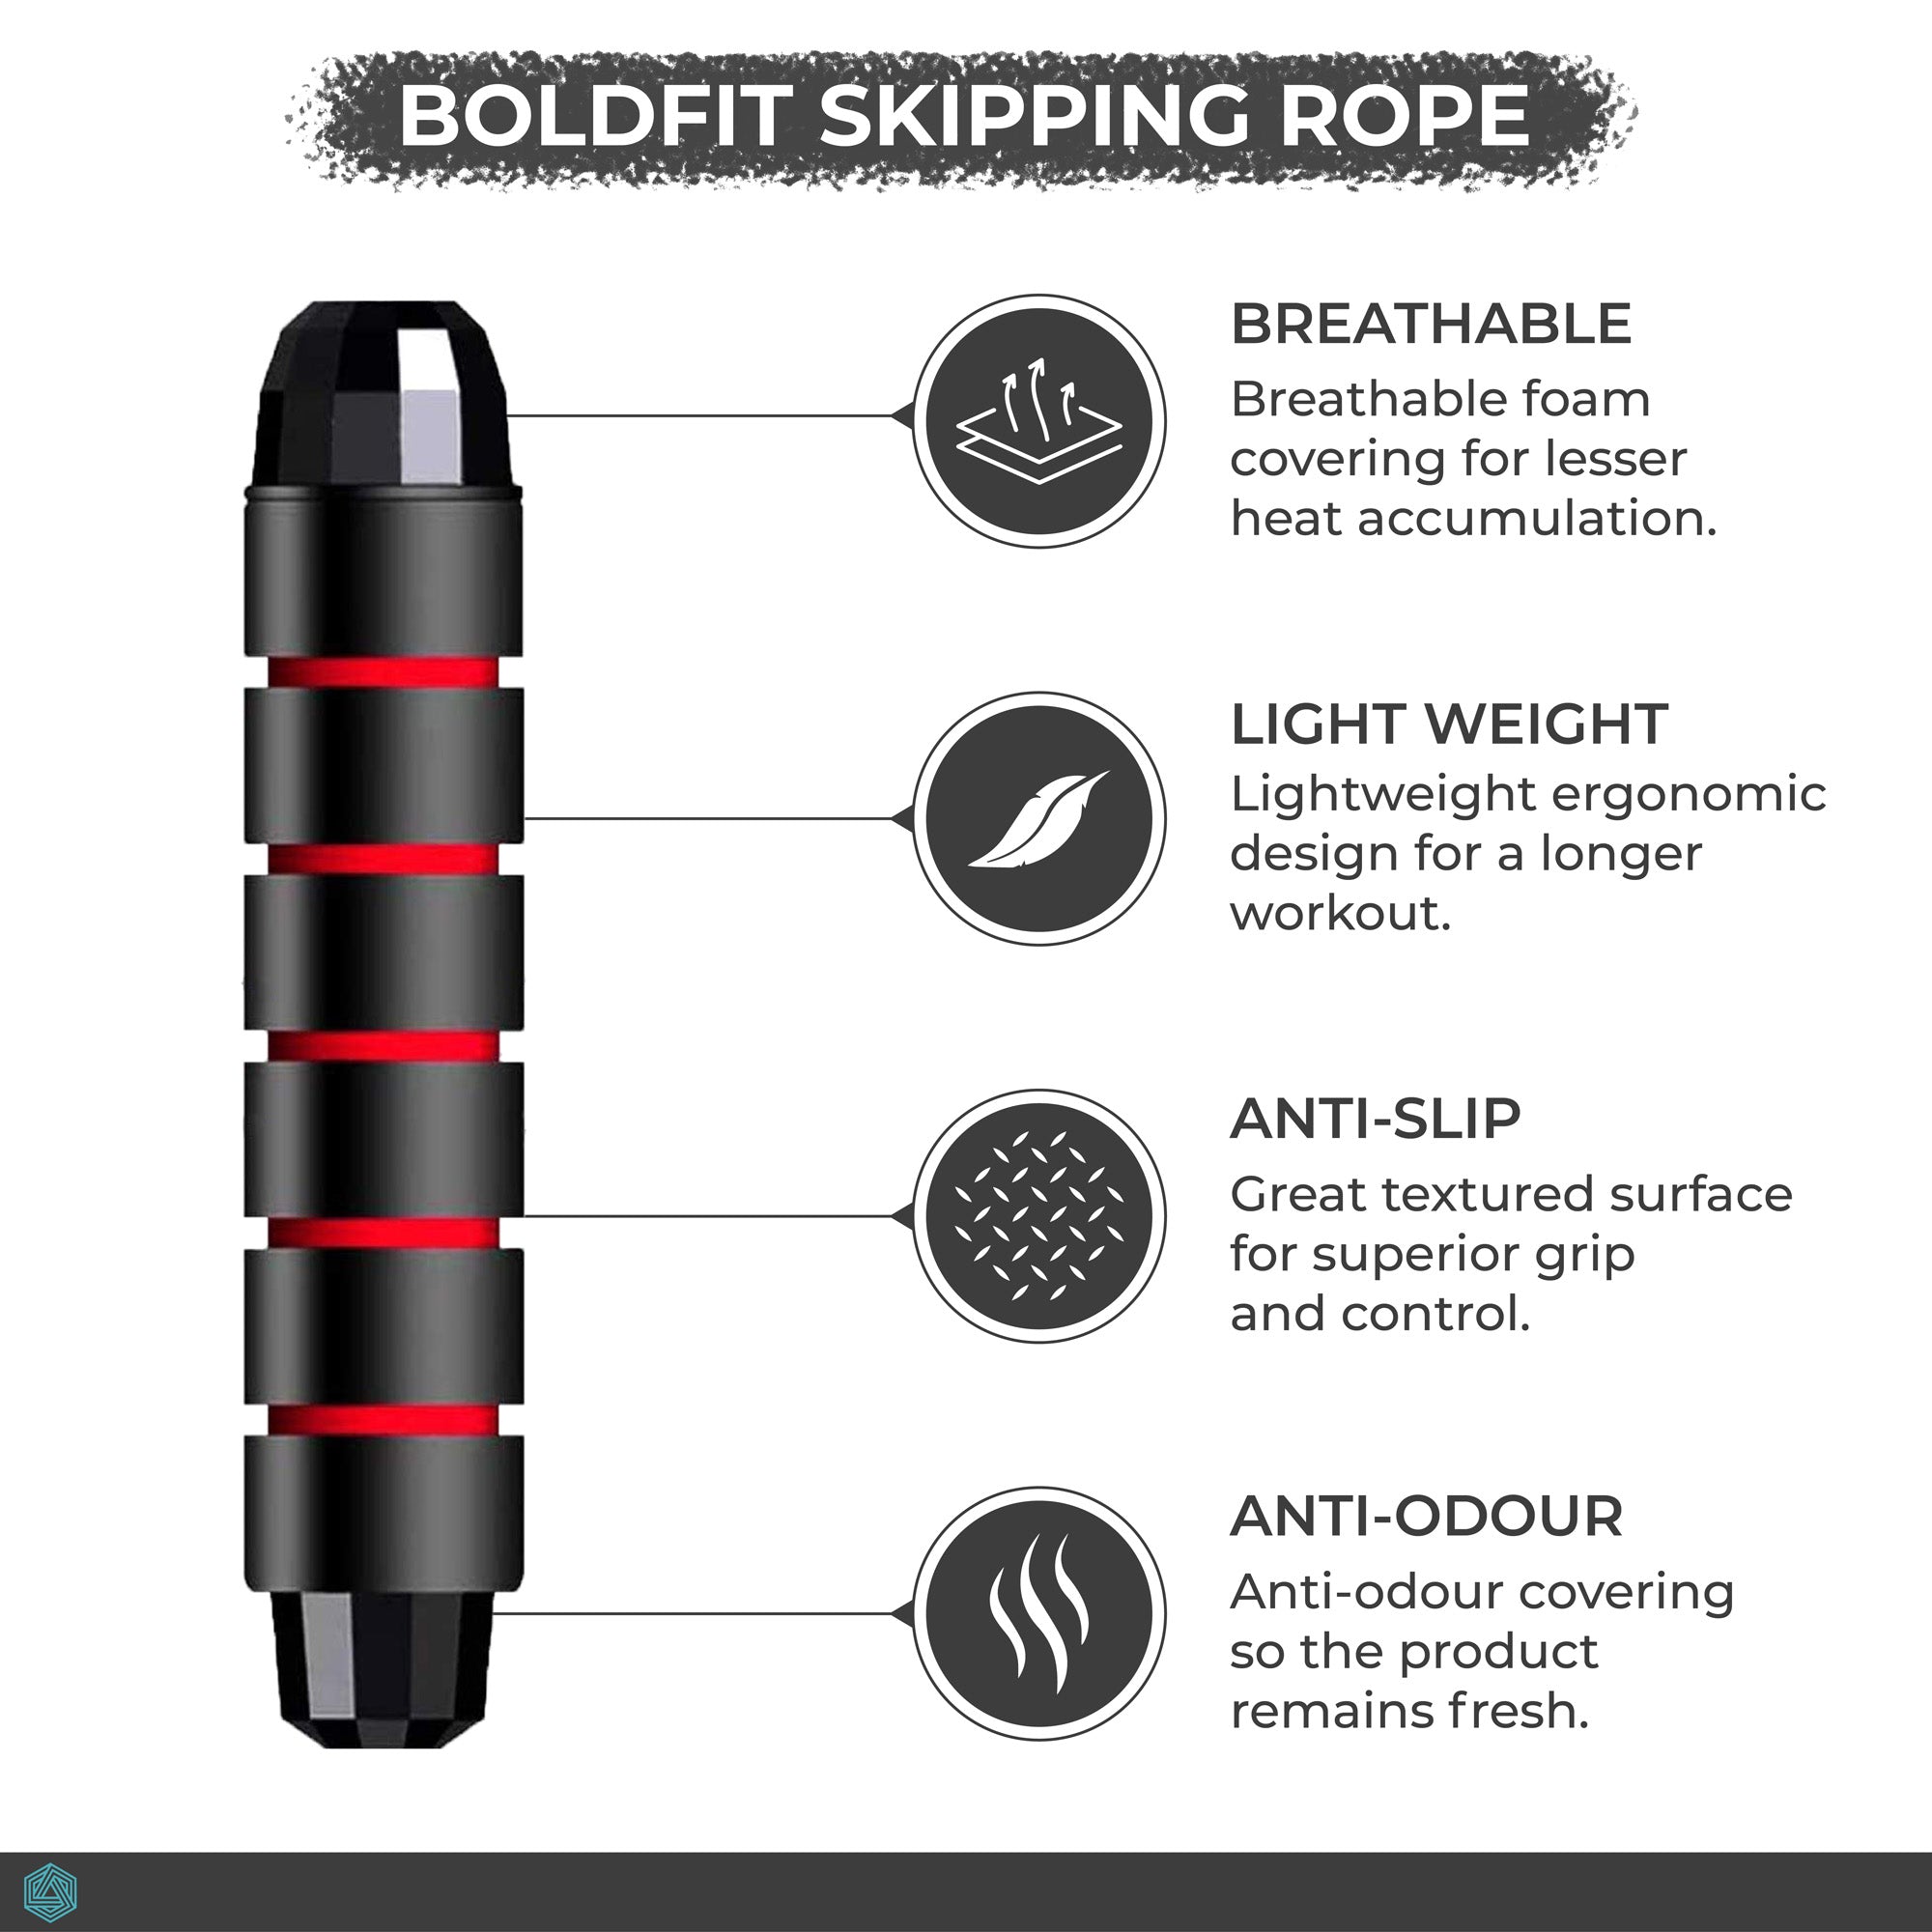 Boldfit Skipping Rope